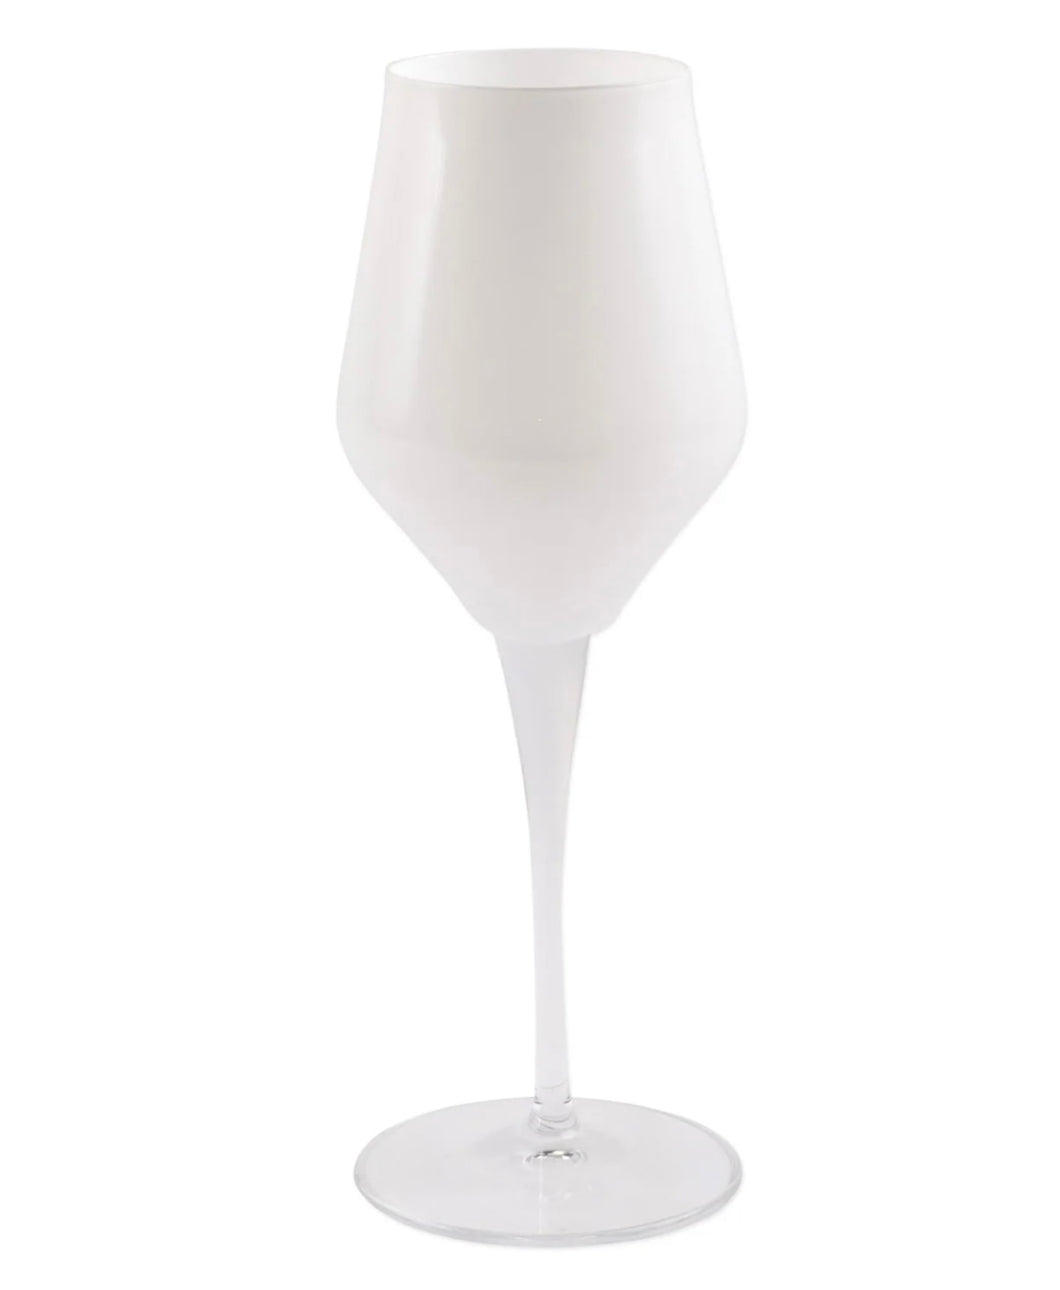 Vietri Contessa Wine Glass - Set of 2